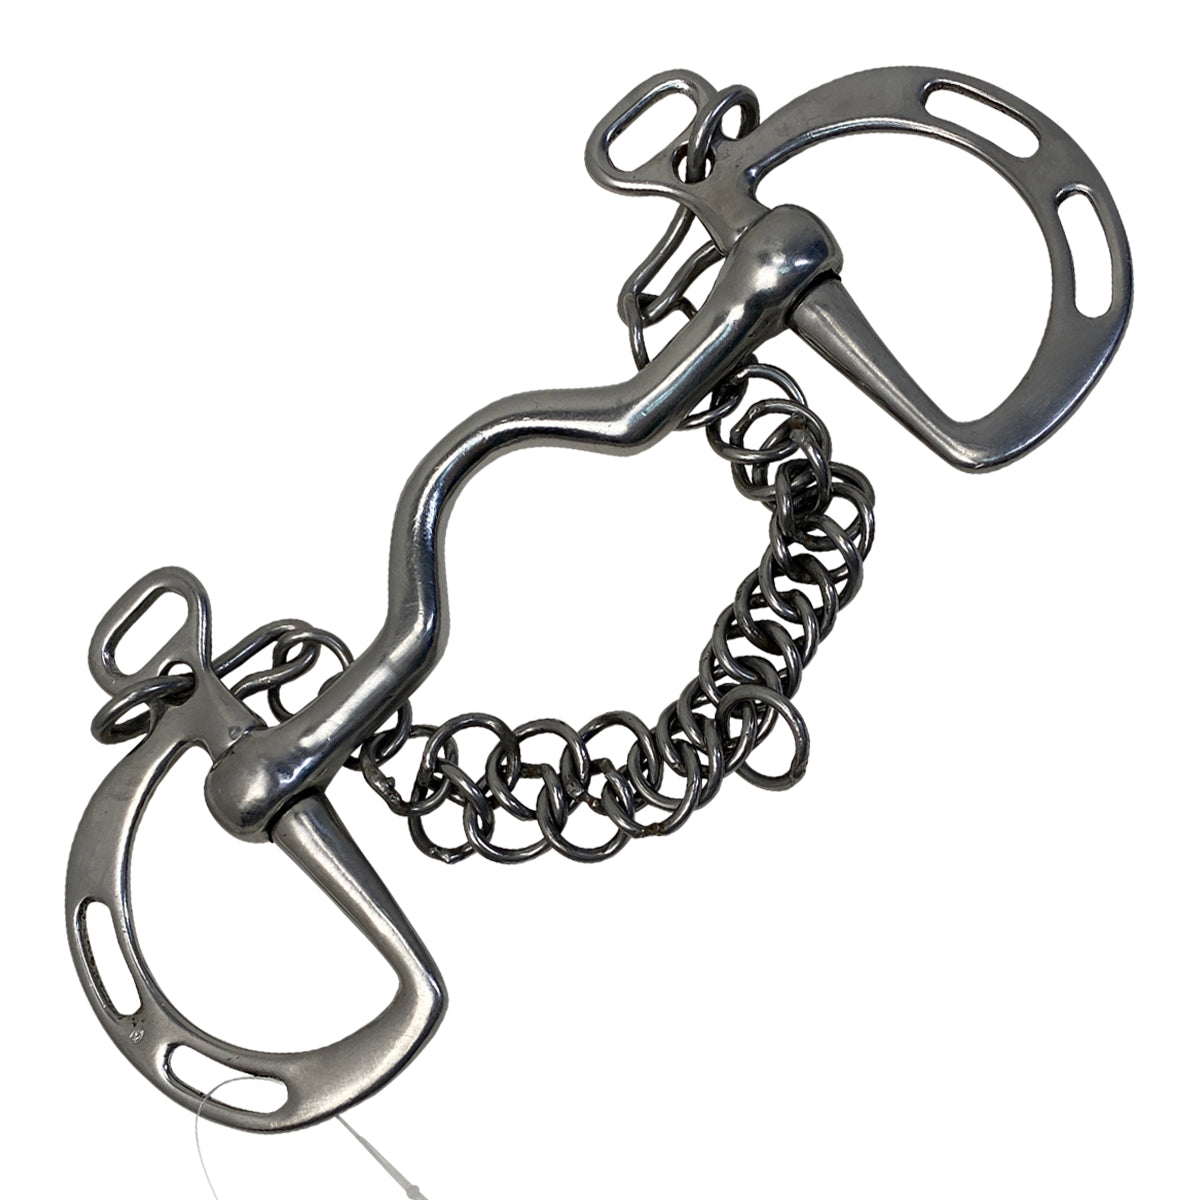 Kimberwick Medium Port Bit w/Curb Chain in Stainless Steel 